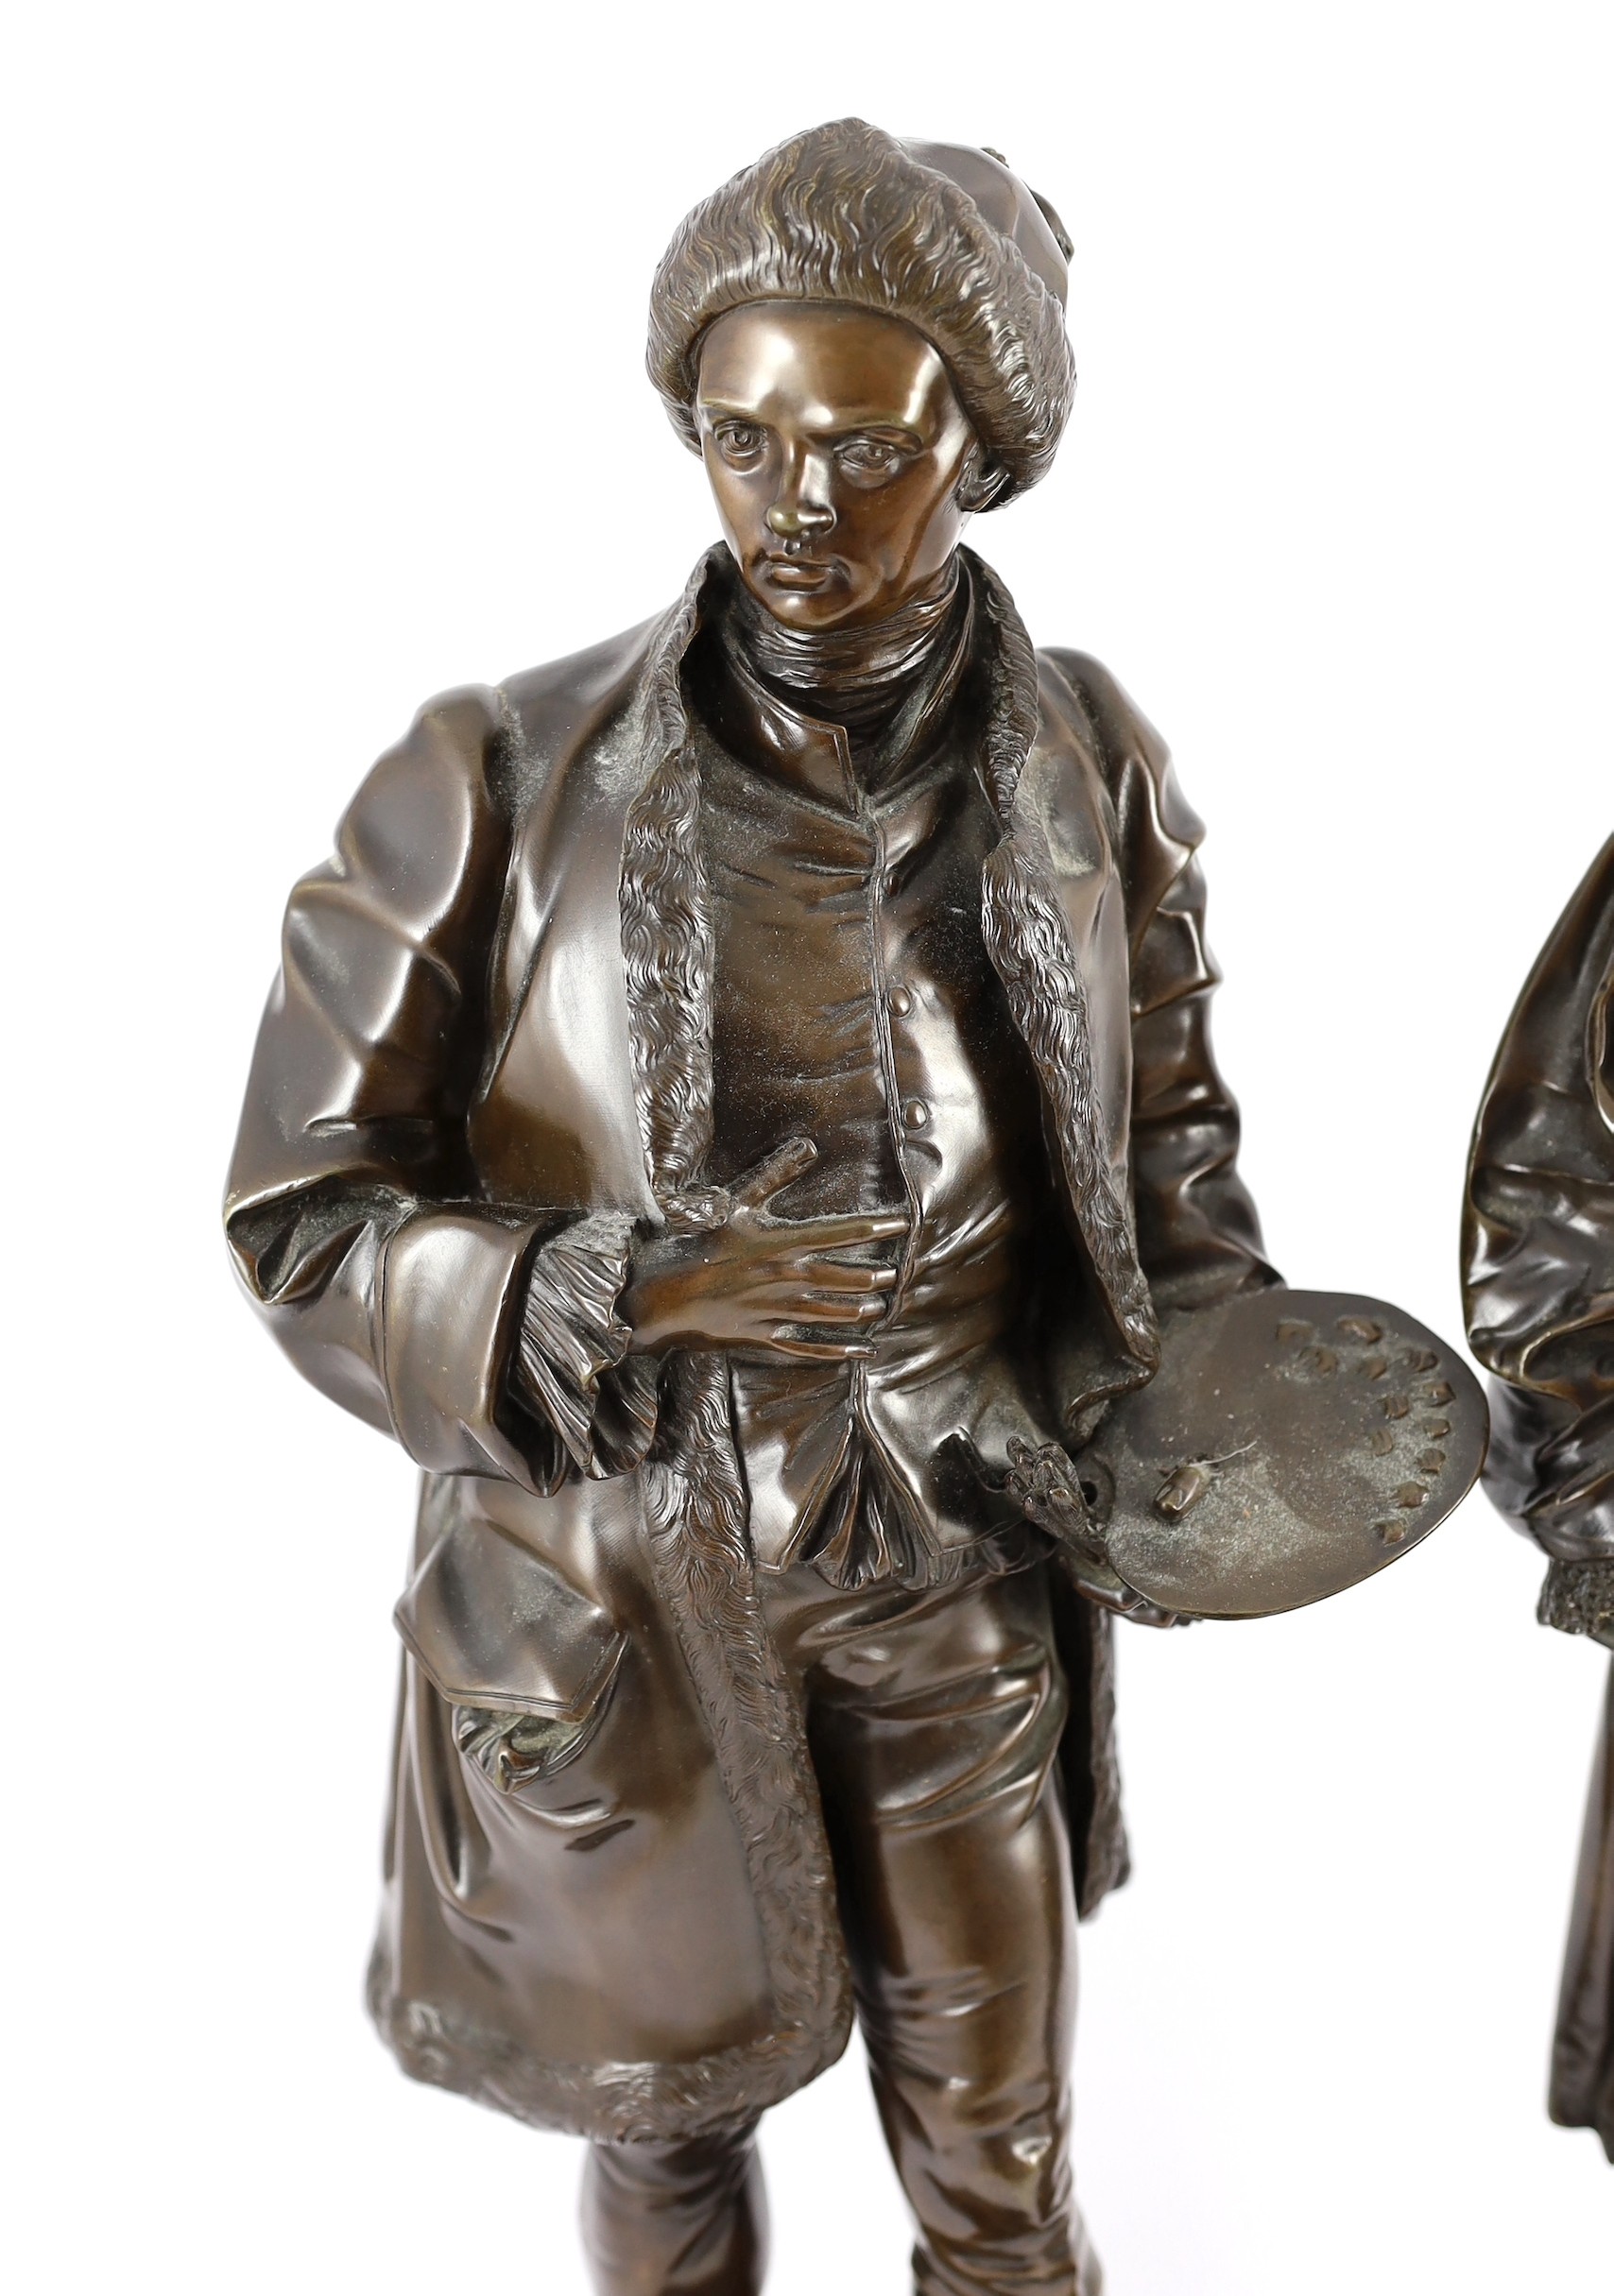 , Jean Jules Salmson (1823-1902). A pair of bronze figures of Sir Joshua Reynolds and William Hogarth, 57cm high